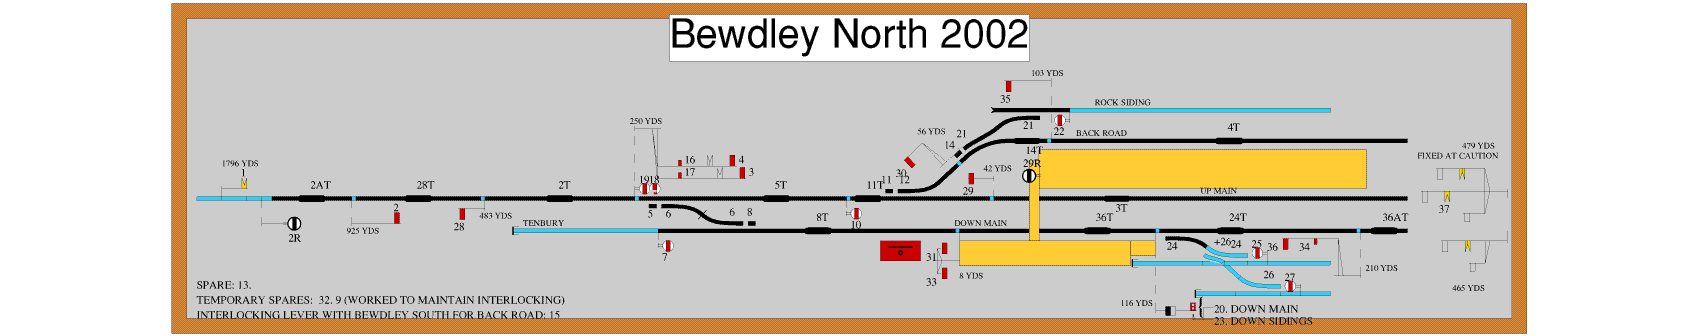 Bewdley North Box